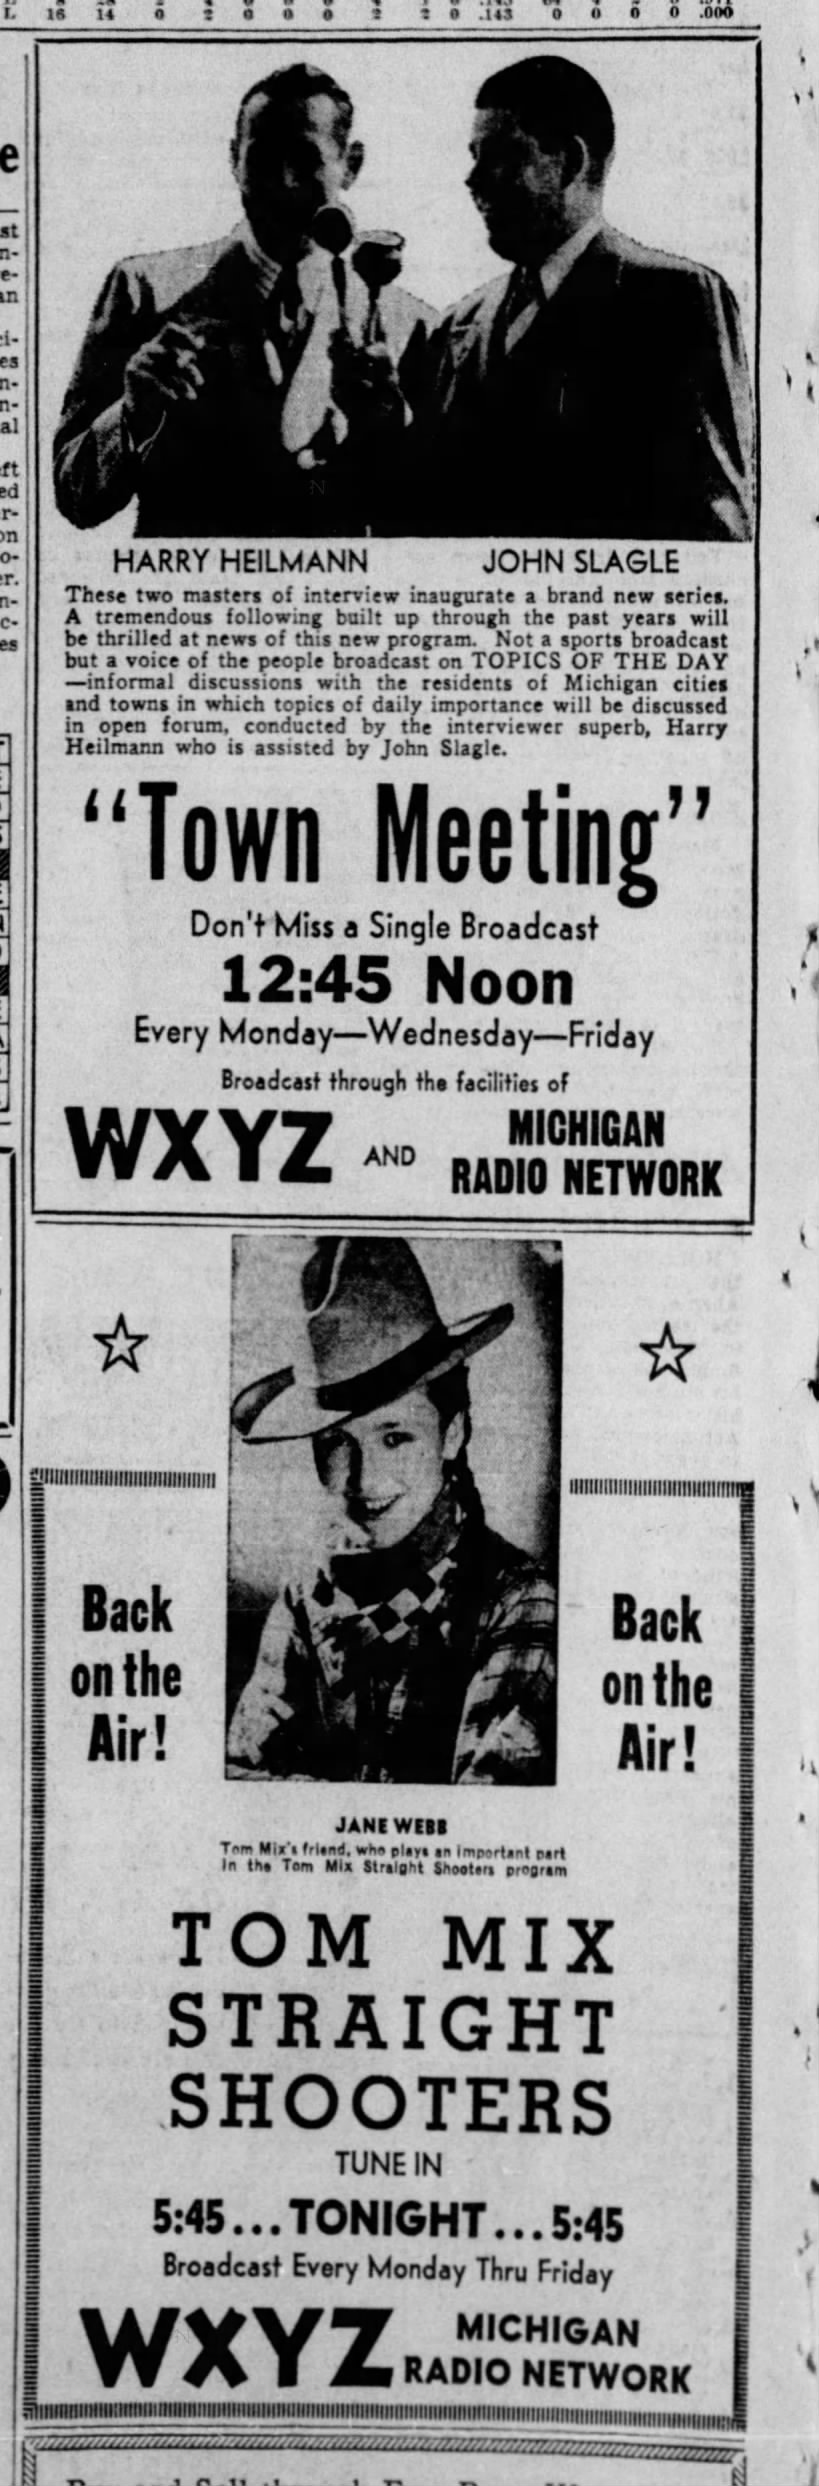 WXYZ advertisement "Town Meeting"